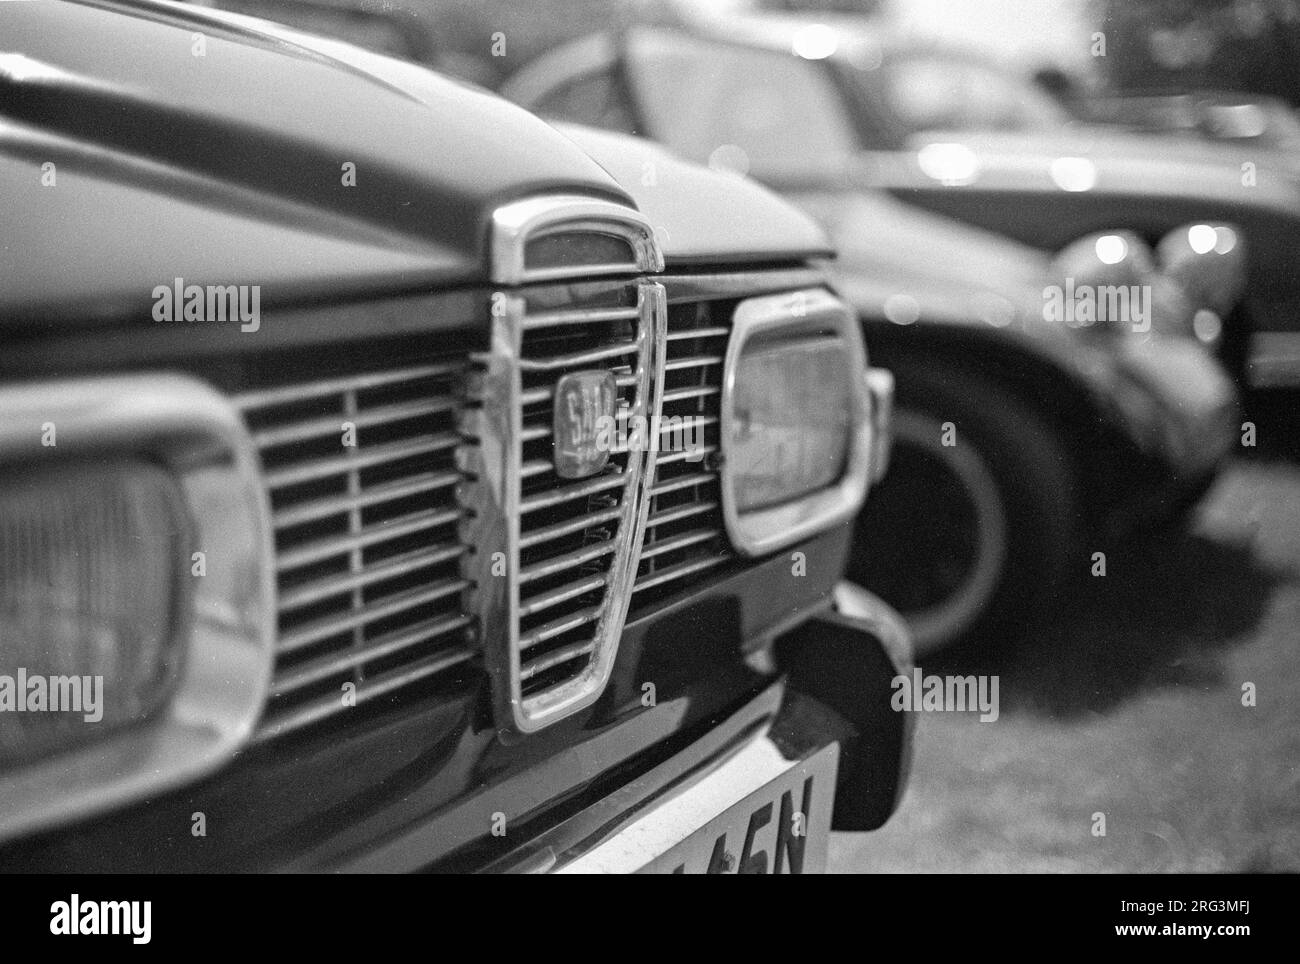 Saab 99 radio grill detail Shot on 35mm film Stock Photo